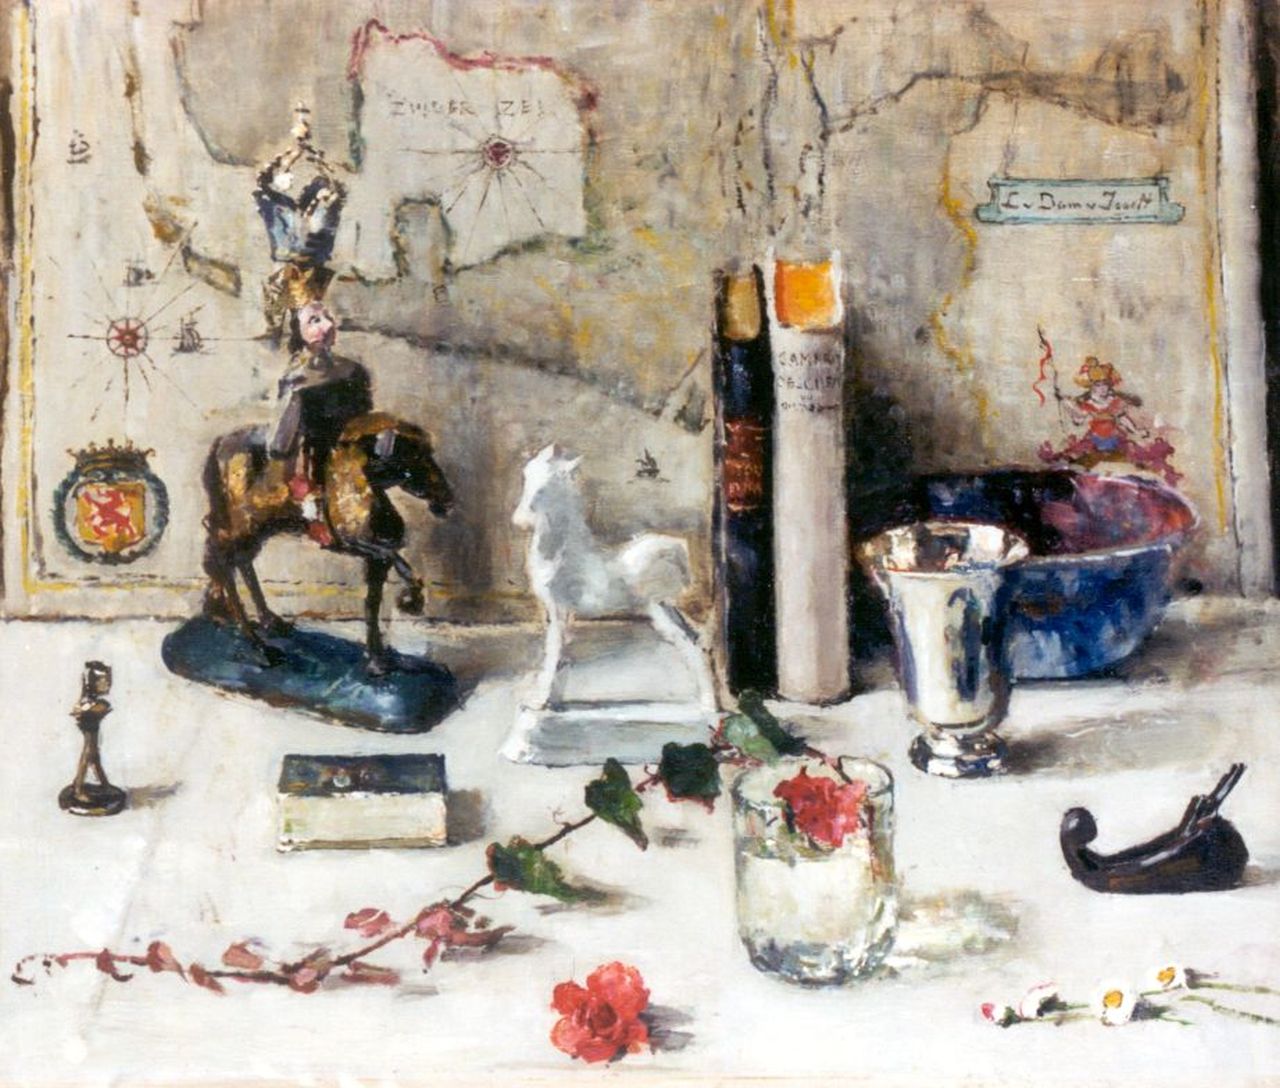 Dam van Isselt L. van | Lucie van Dam van Isselt, A still life, oil on panel 53.0 x 62.7 cm, signed u.r. and painted in 1948